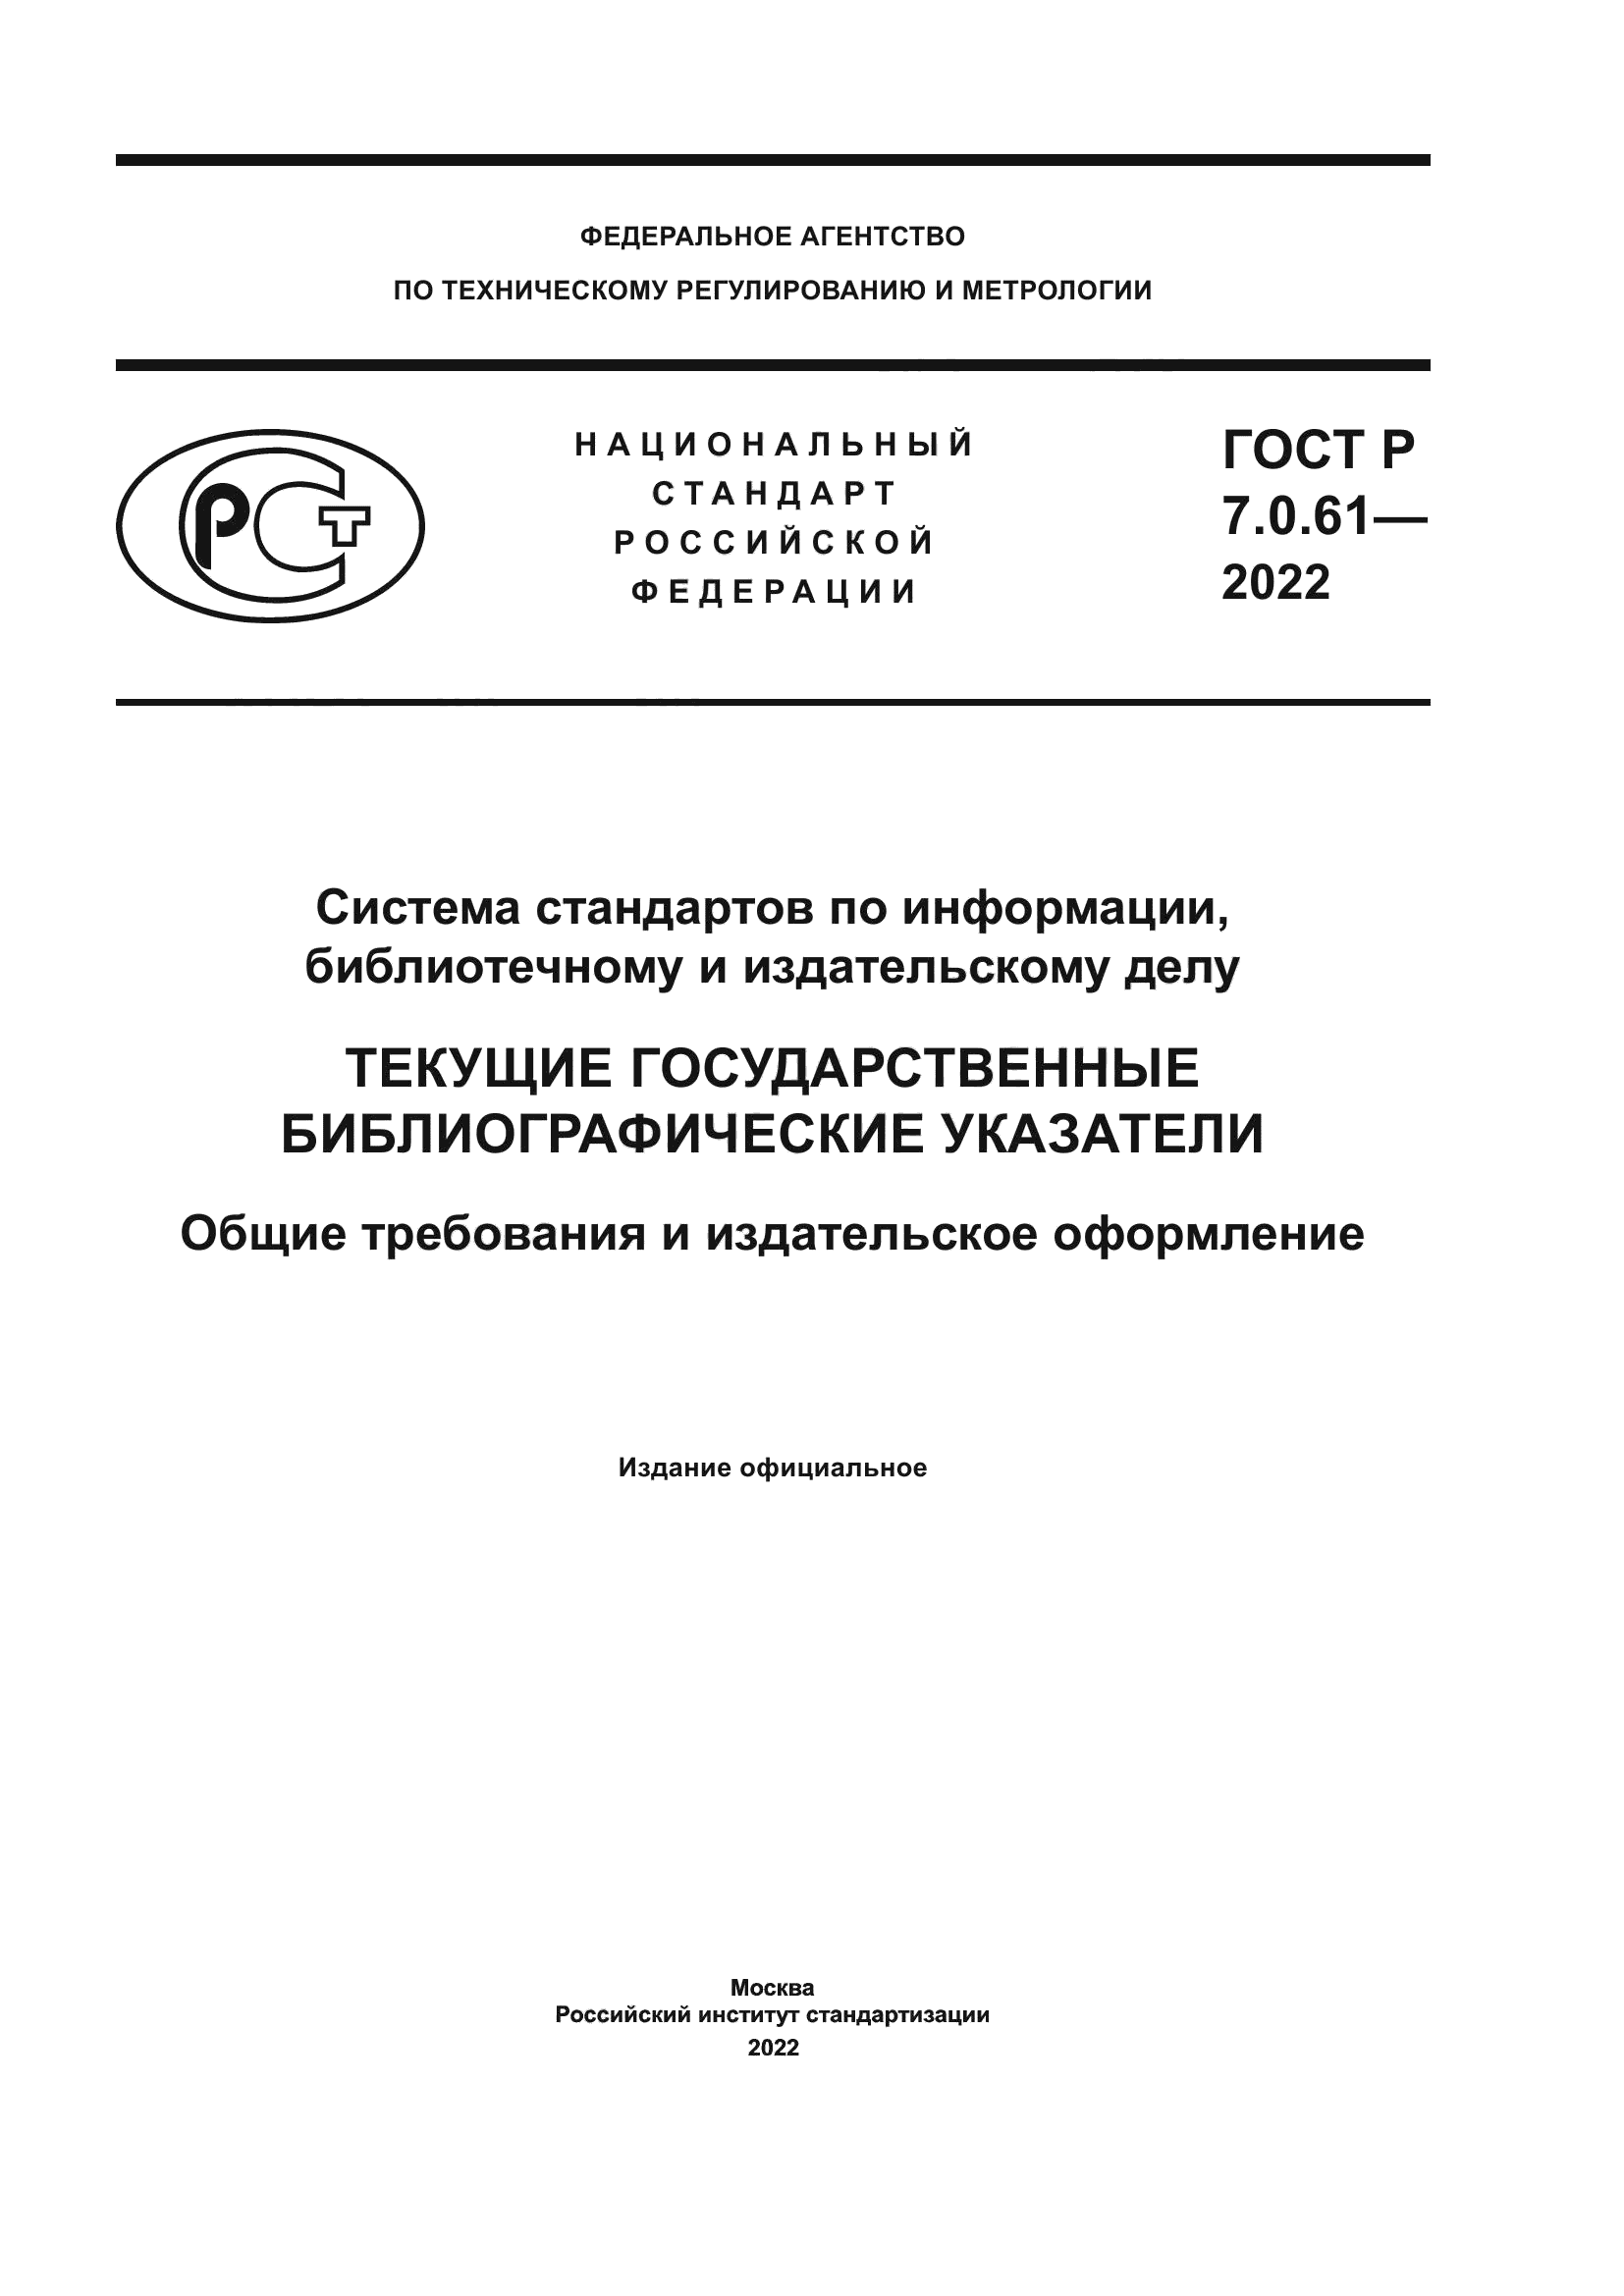 ГОСТ Р 7.0.61-2022